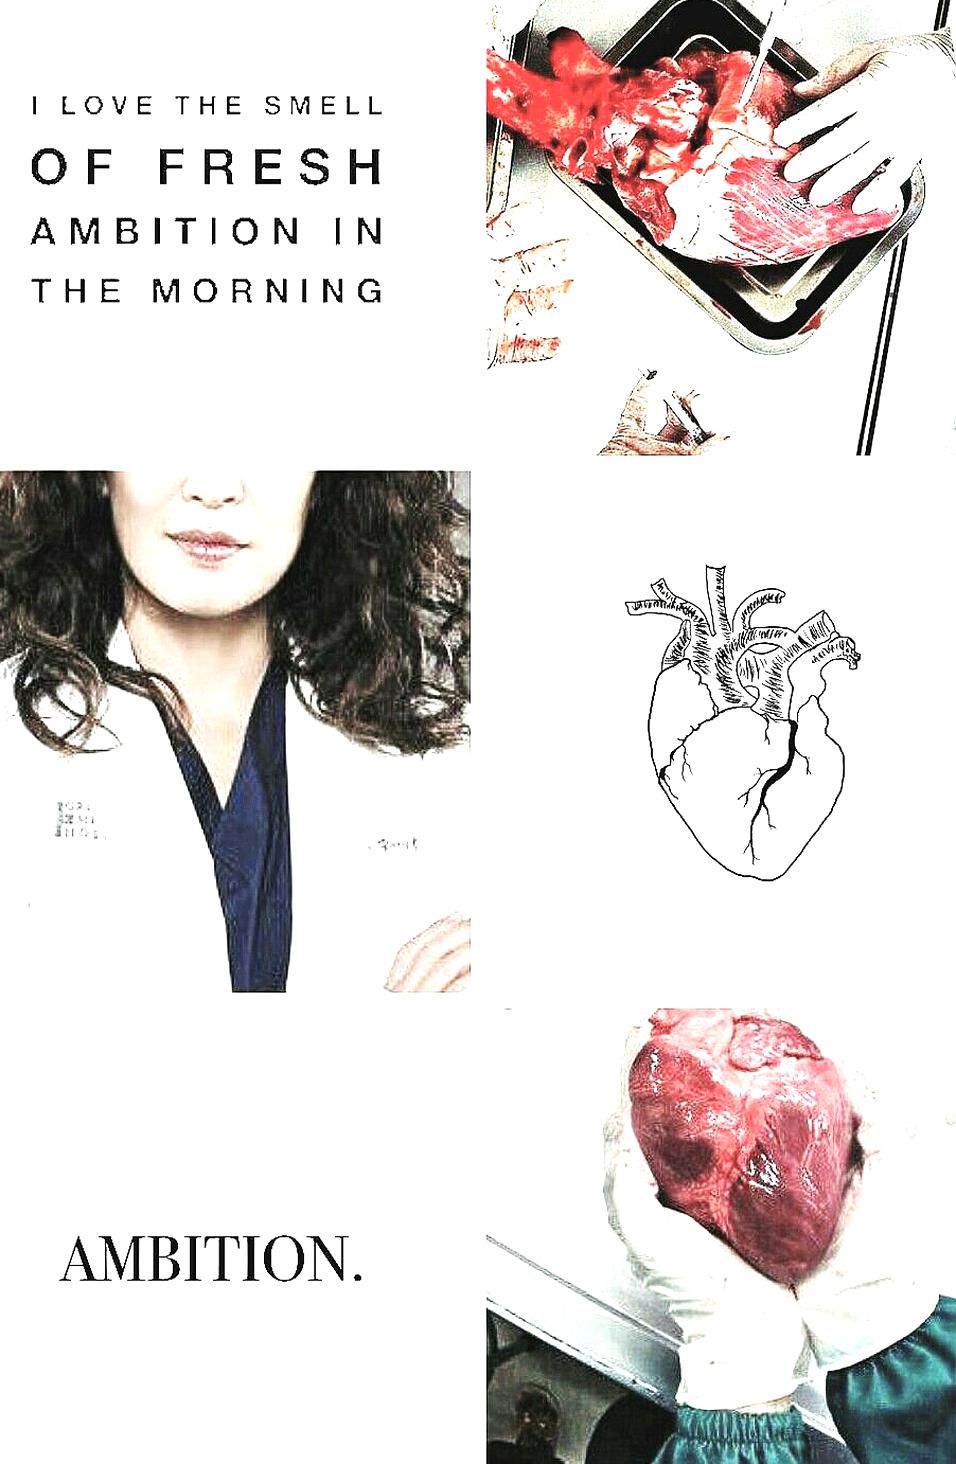 Cristina Yang Aesthetic Greys Anatomy. Greys anatomy facts, Medical wallpaper, Grey's anatomy wallpaper quotes